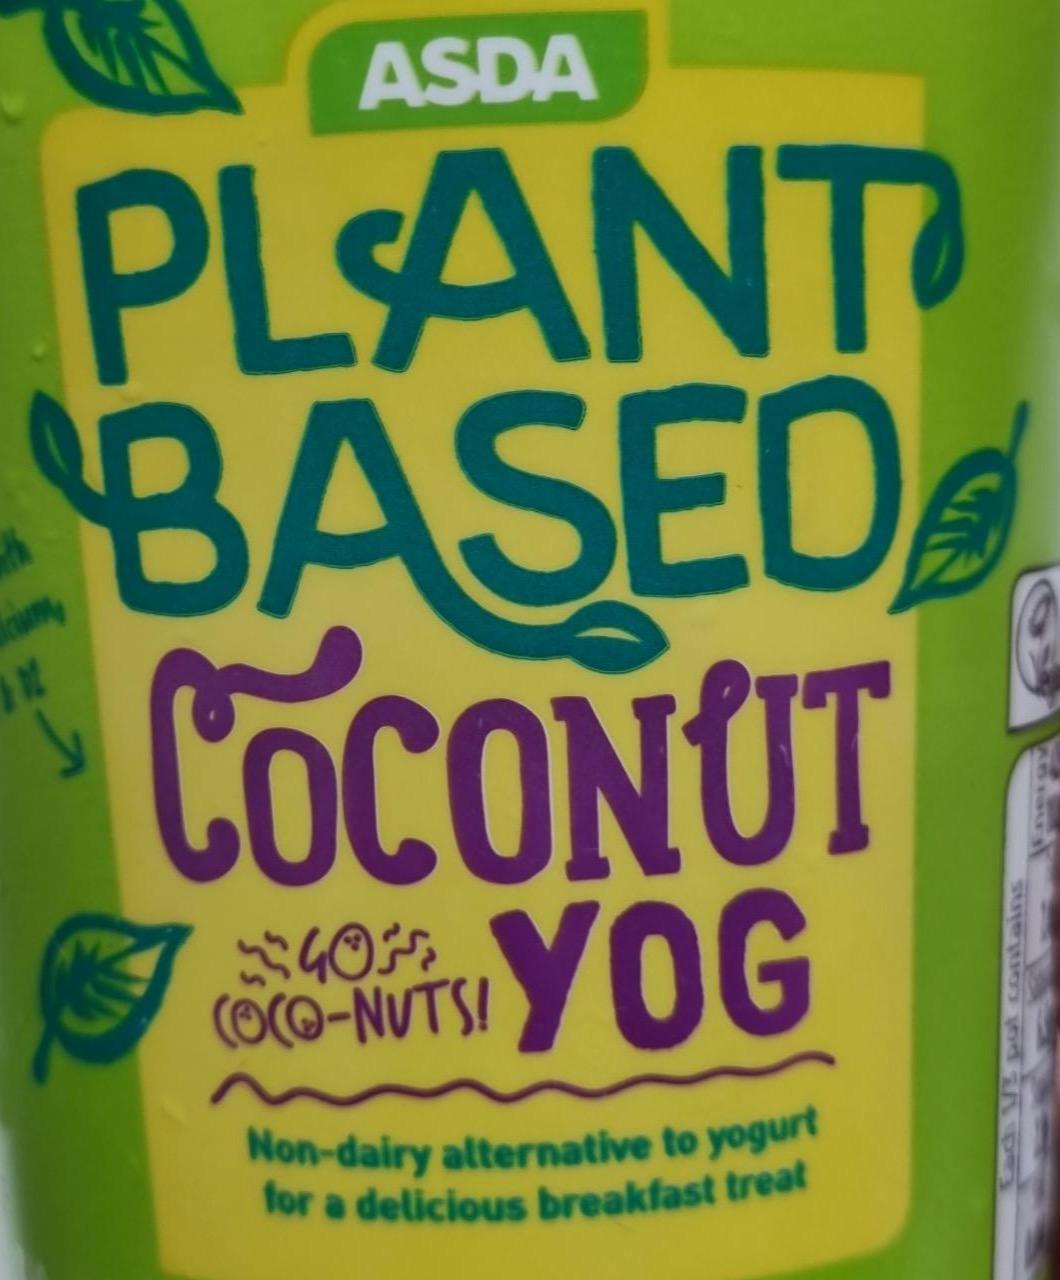 Fotografie - Plant based coconut yog Asda